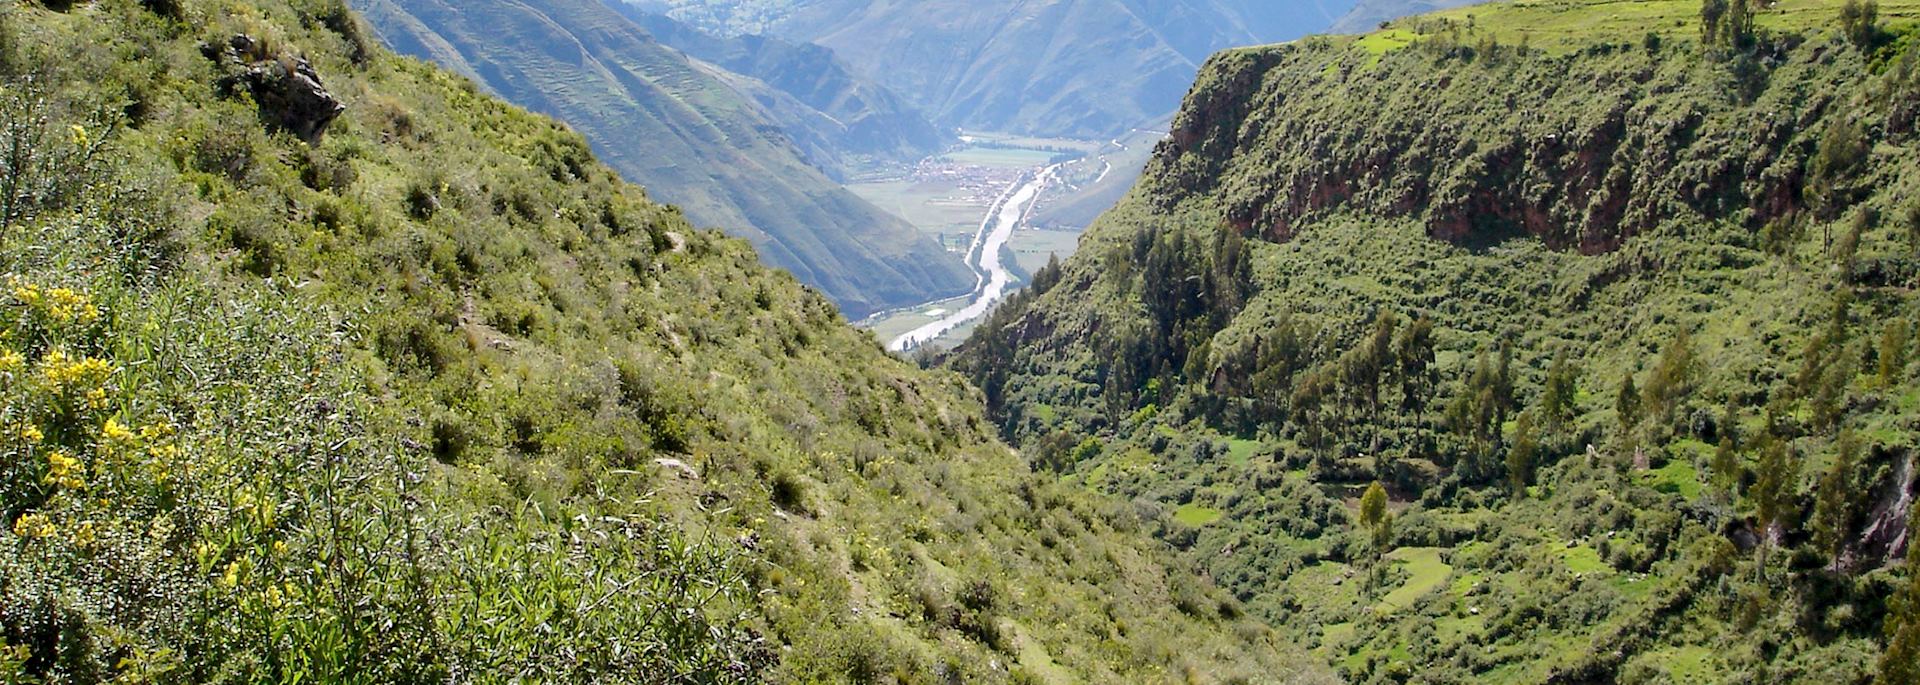 Sacred Valley, Peru